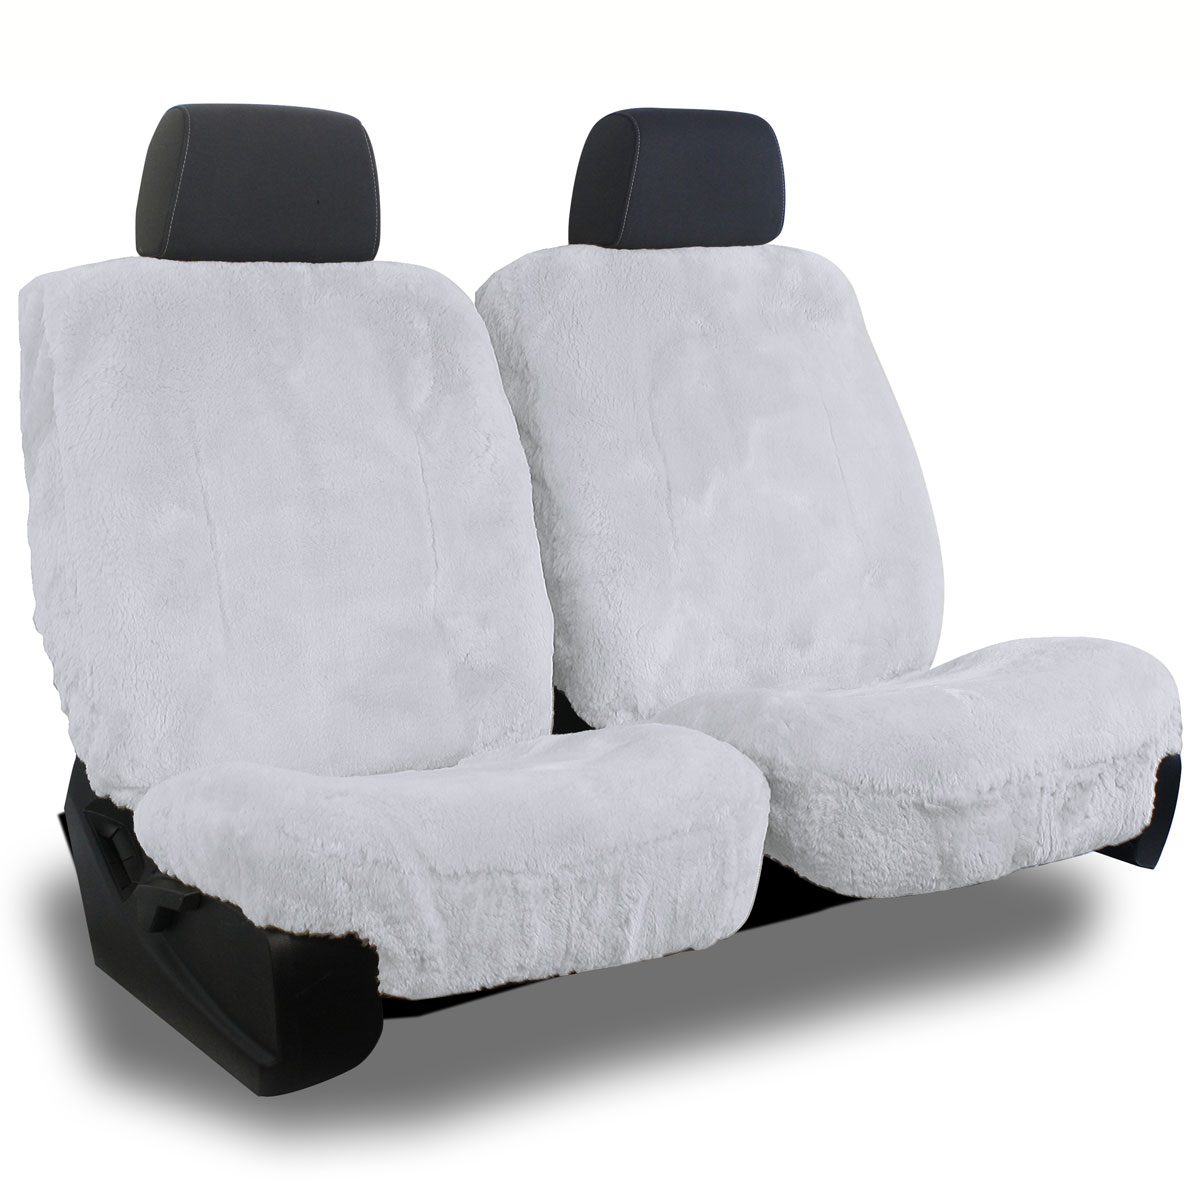 SCA Neoprene Seat Covers - Black Adjustable Headrests Size 30